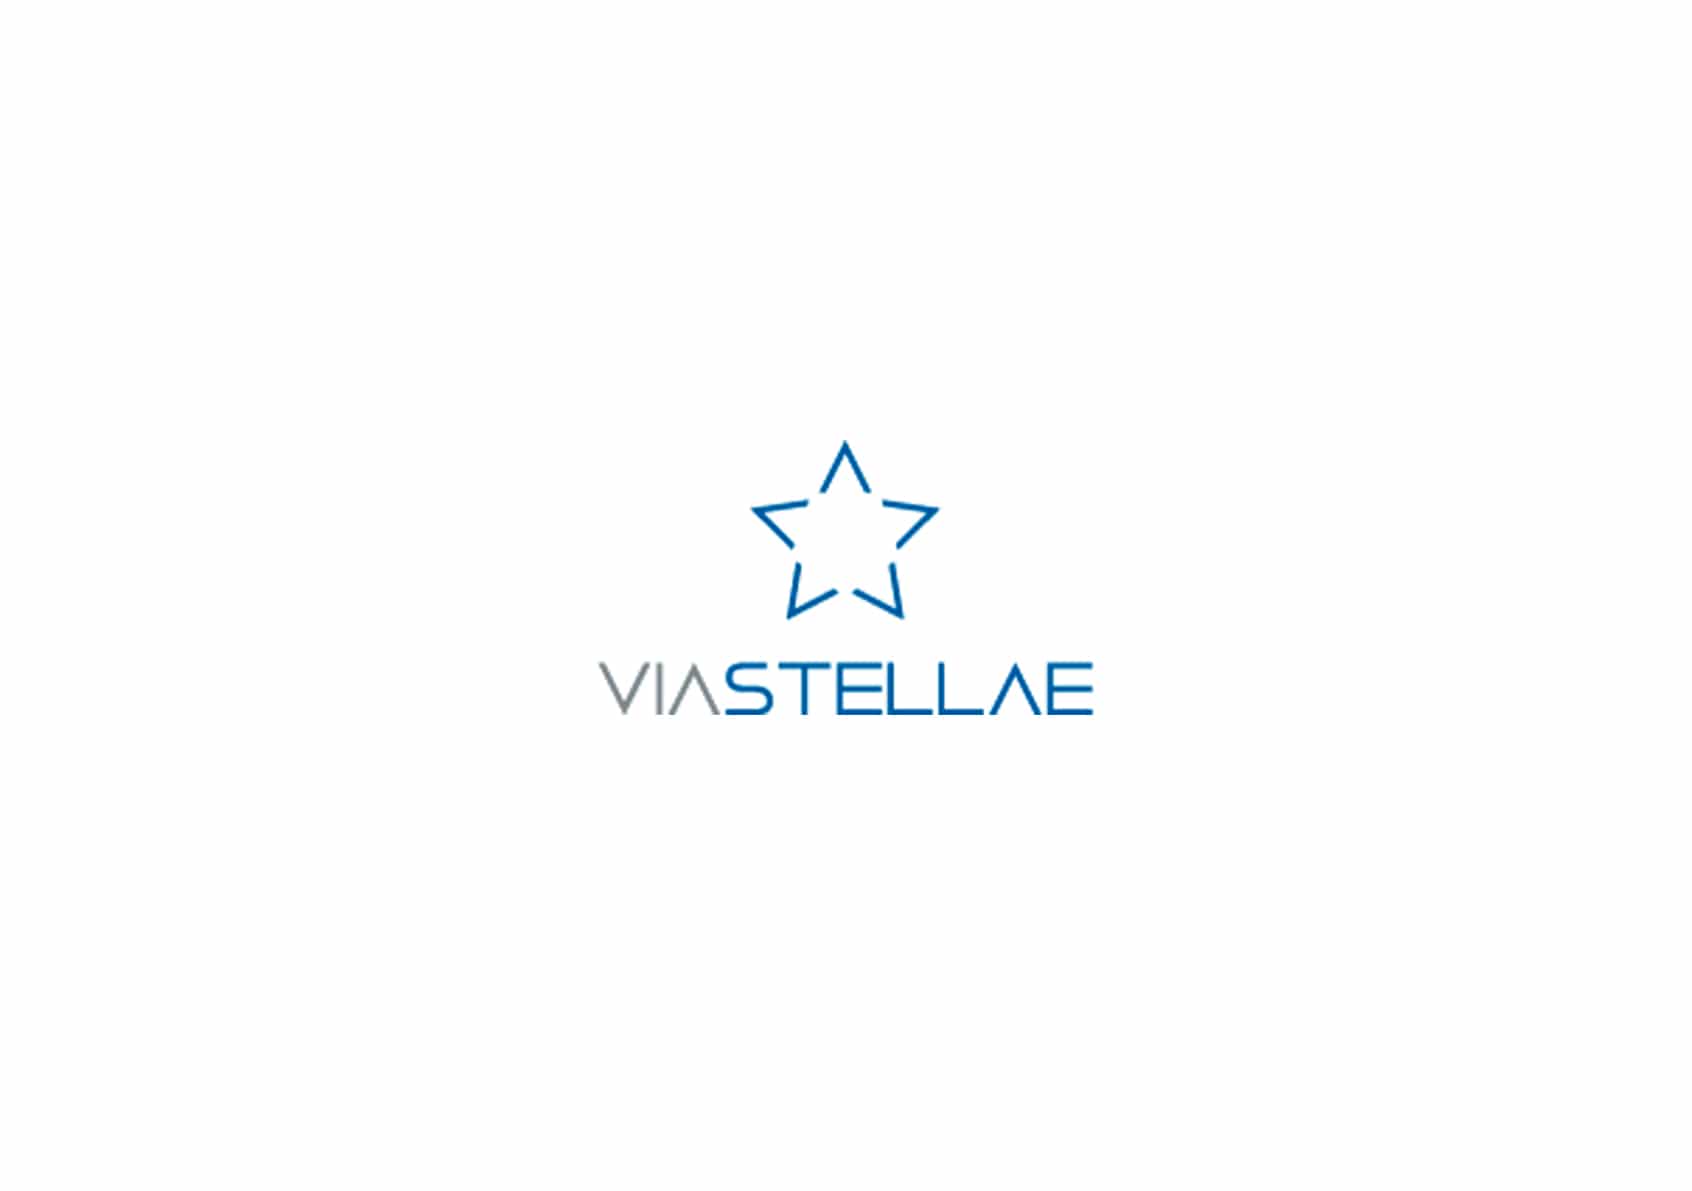 viastellae logo - inova3 - Marketing digital desde ourense